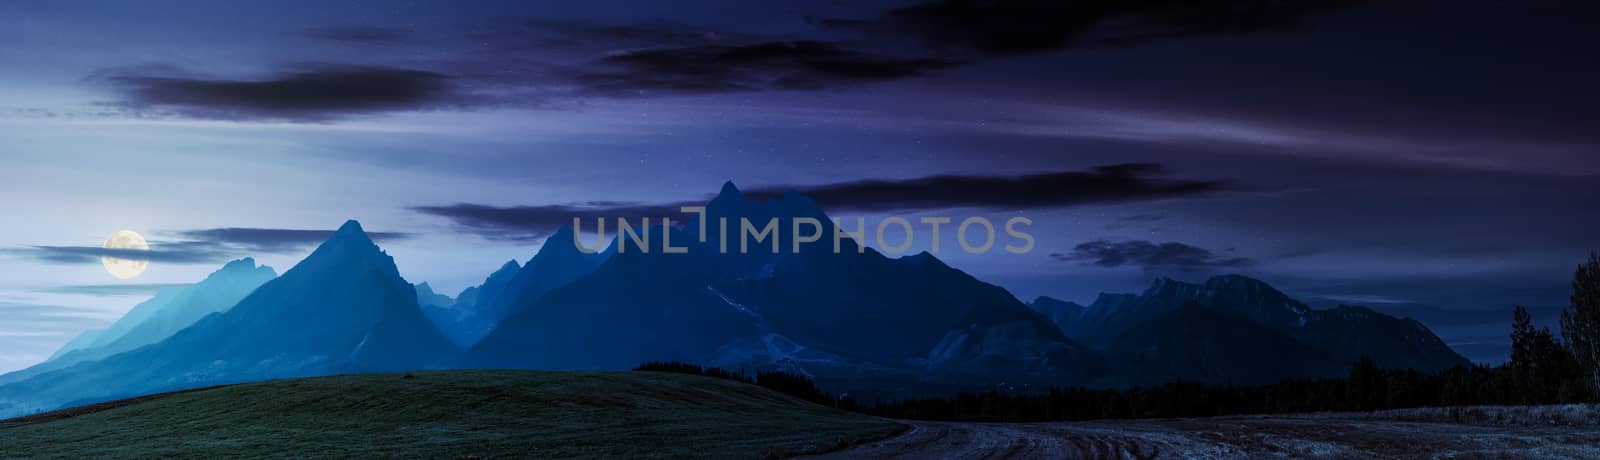 rural fields near Tatra Mountains at night by Pellinni